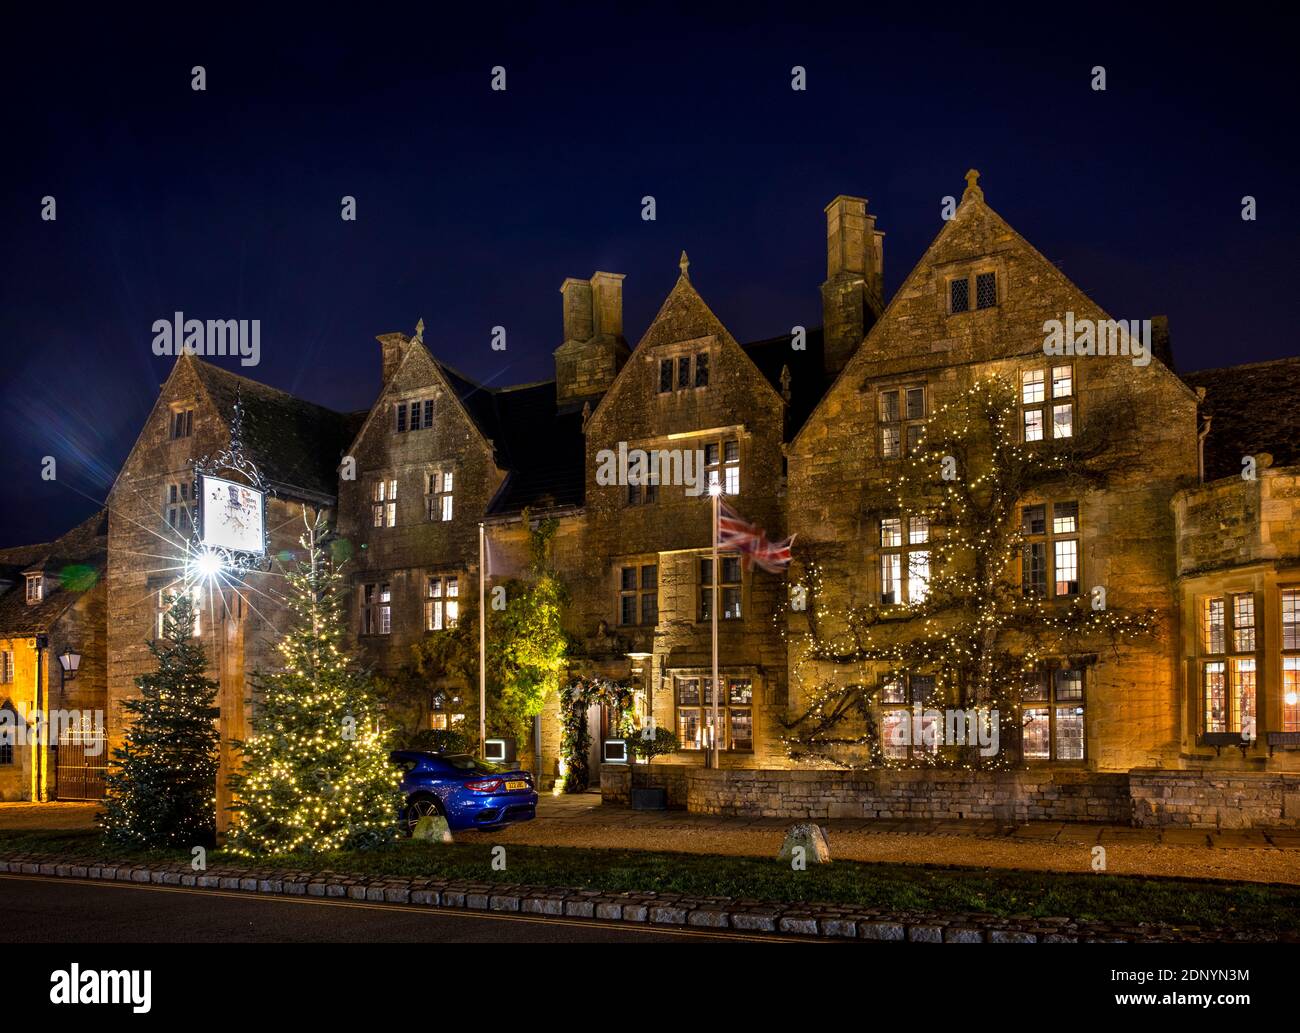 UK, Gloucestershire, Broadway, High Street, Lygon Arms Hotel illuminated for Christmas Stock Photo